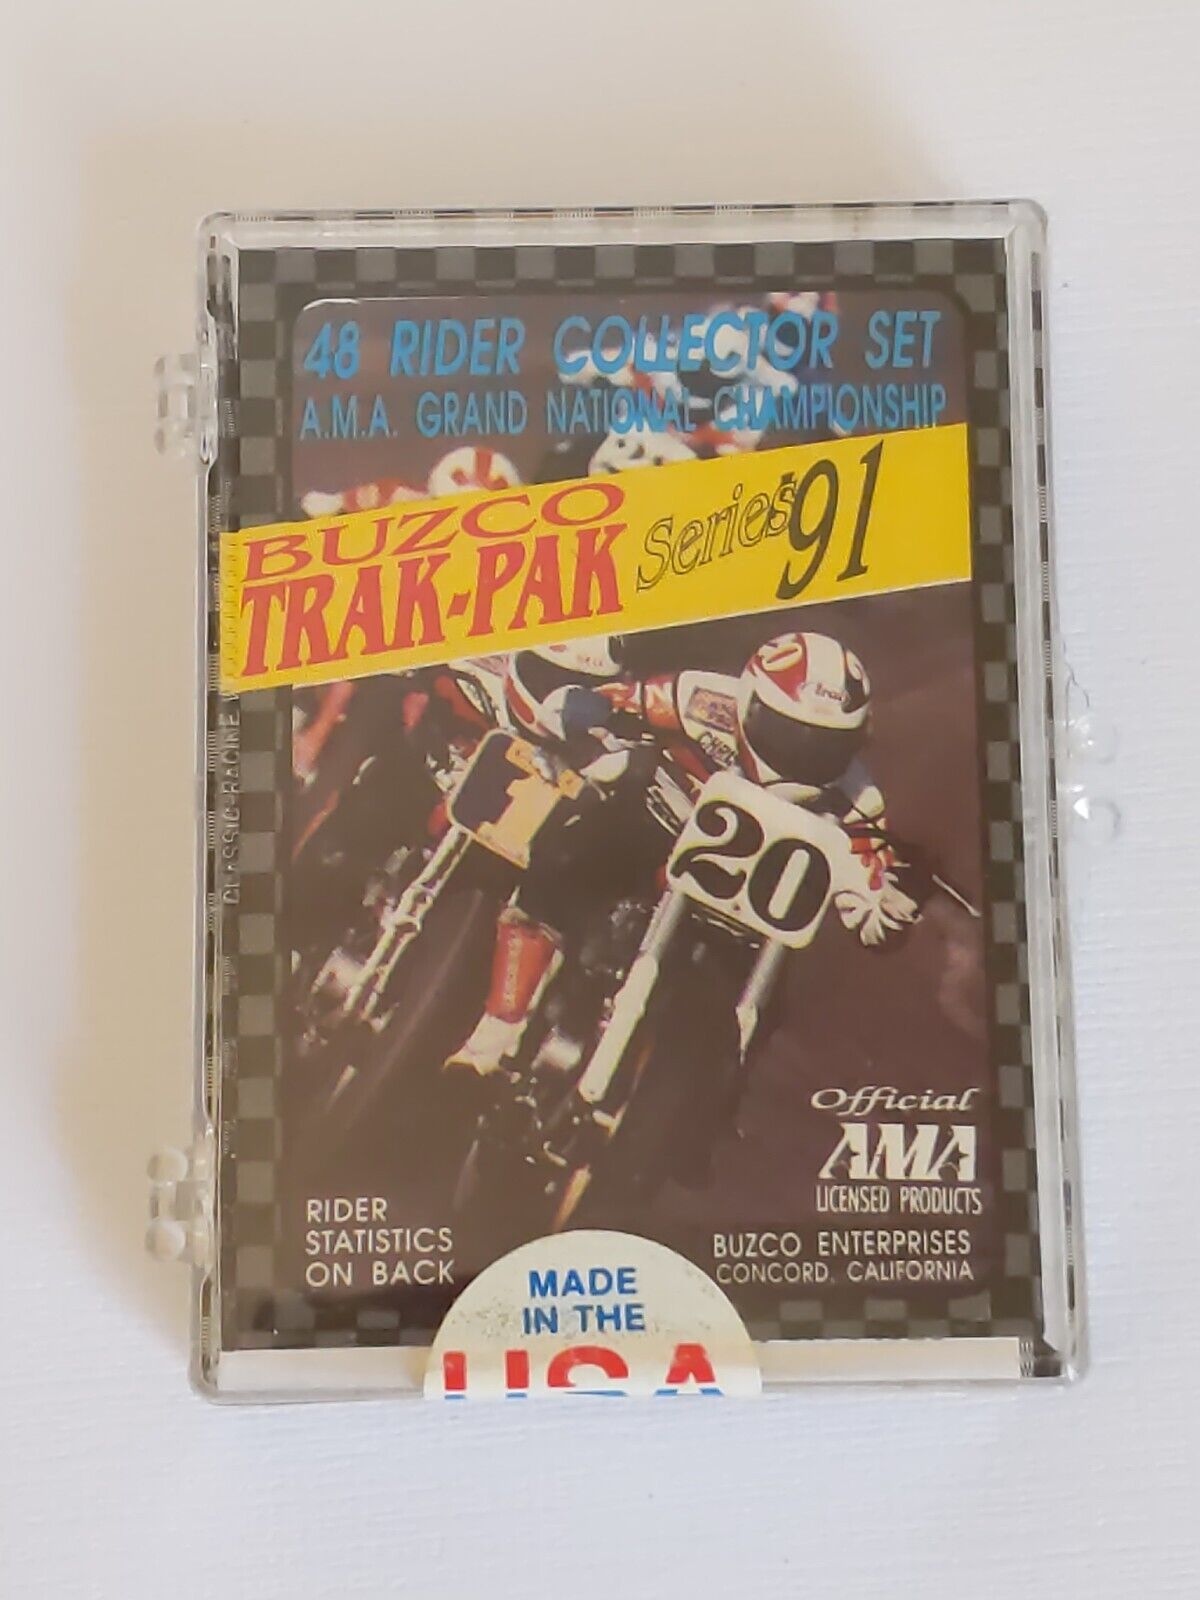 Rare AMA Motorcycle Flat-Track BUZCO TRAK-PAK Series 91 Collector Cards Set